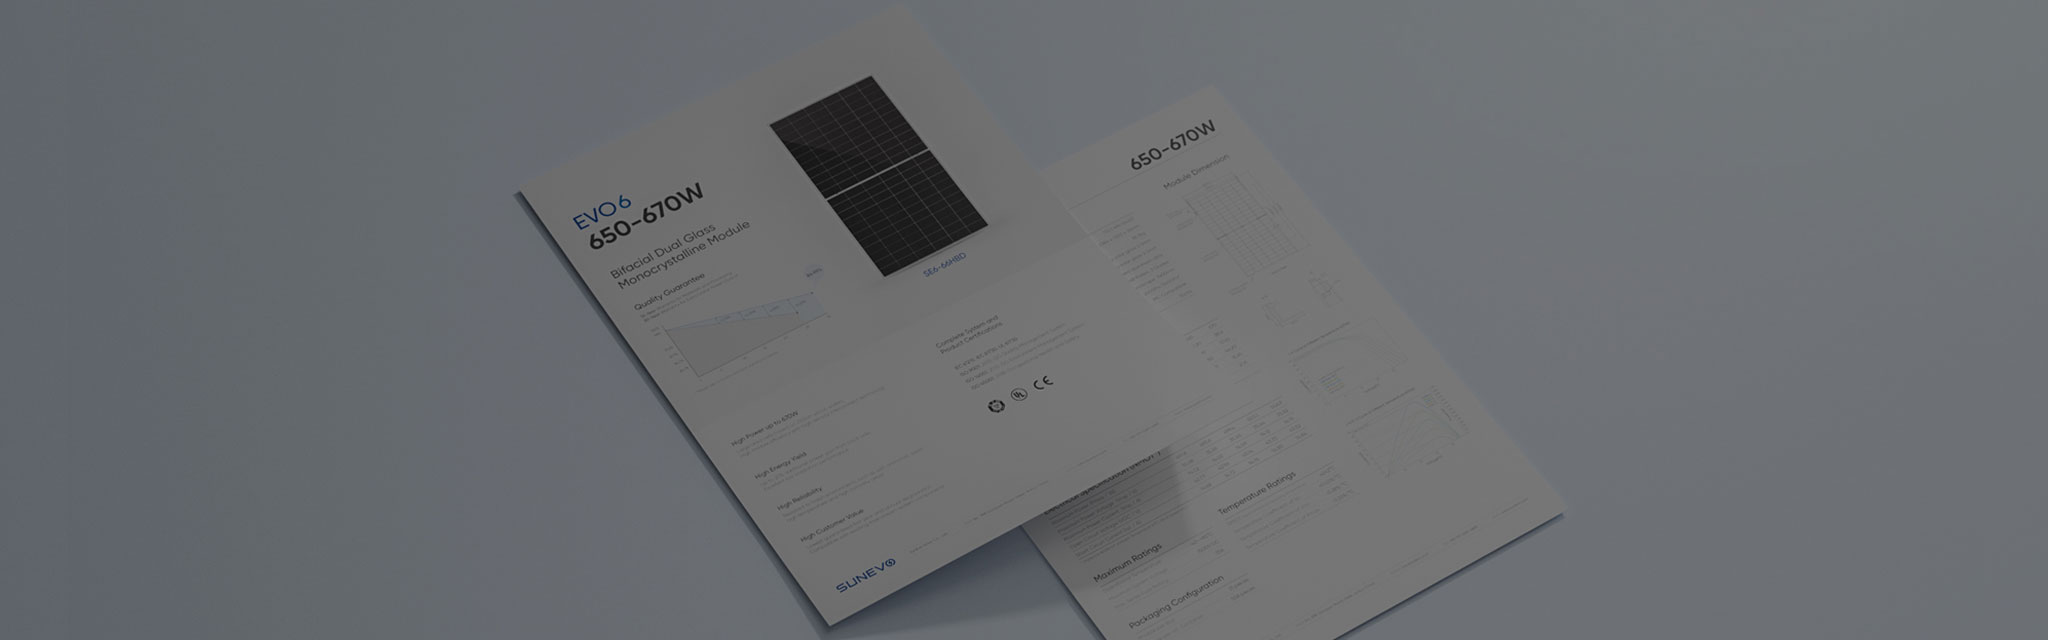 Download Solar Panel Specification Datasheet